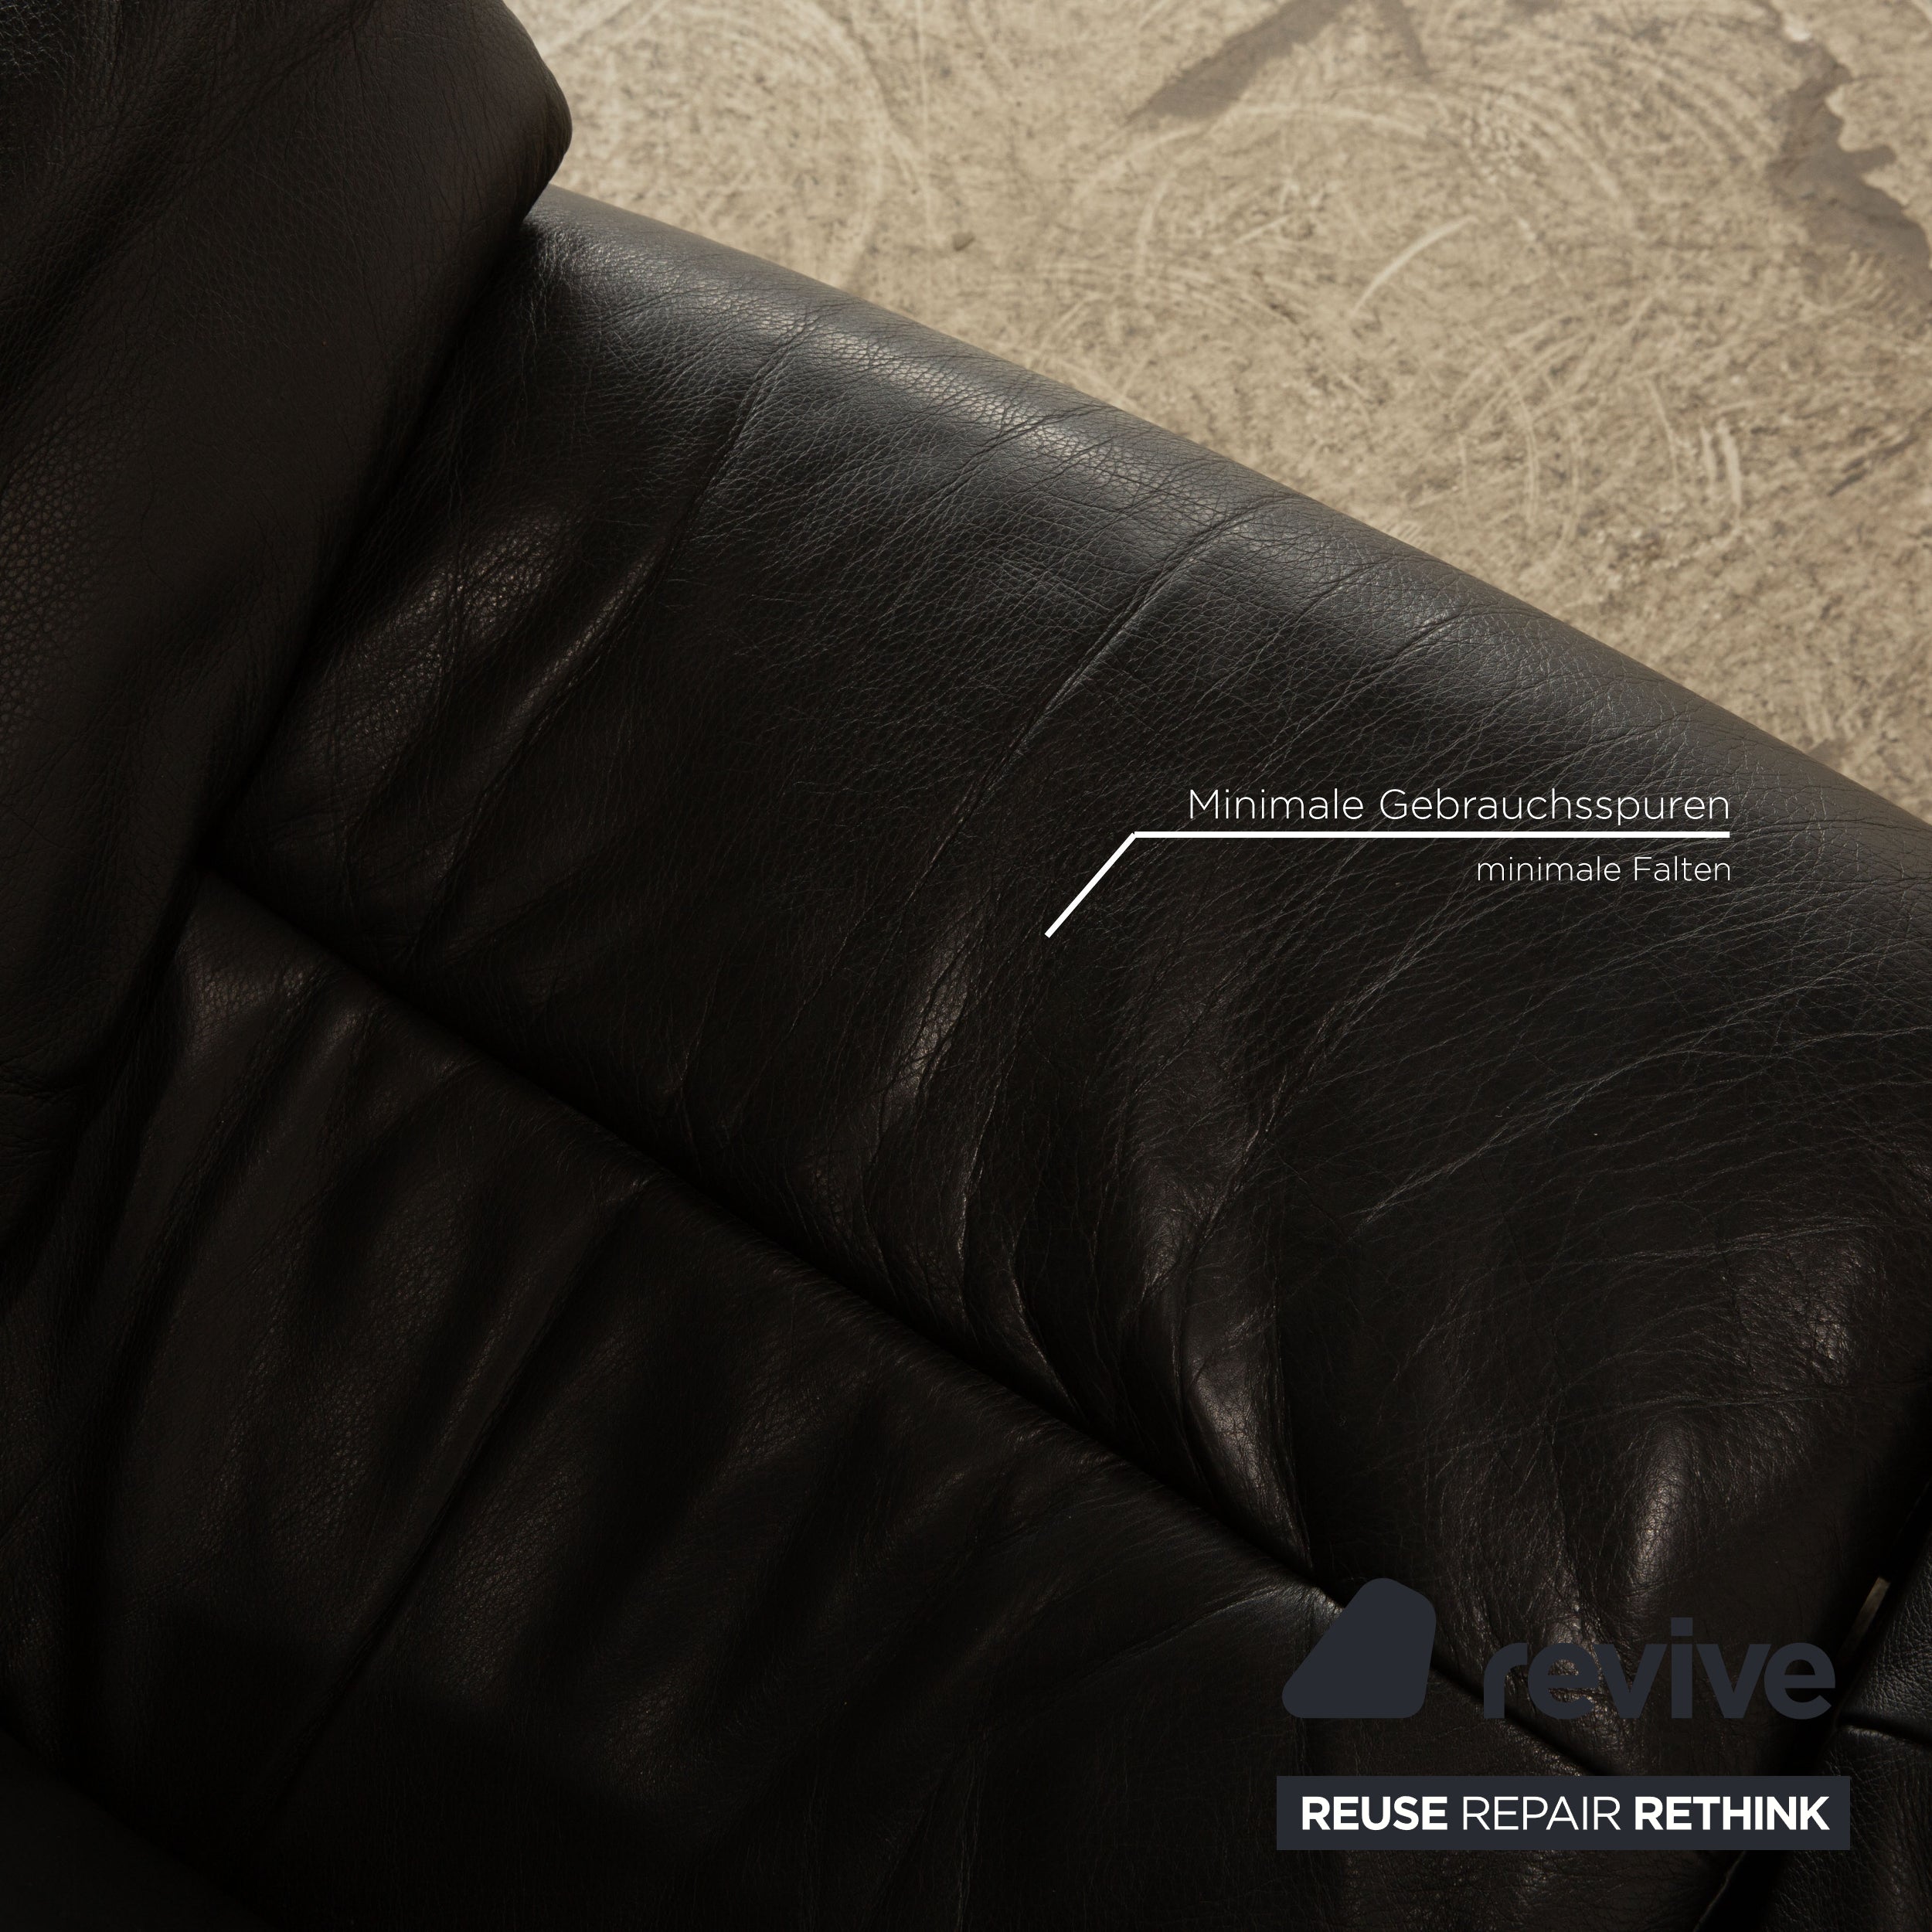 Stressless Eldorado leather sofa set black two-seater couch manual function